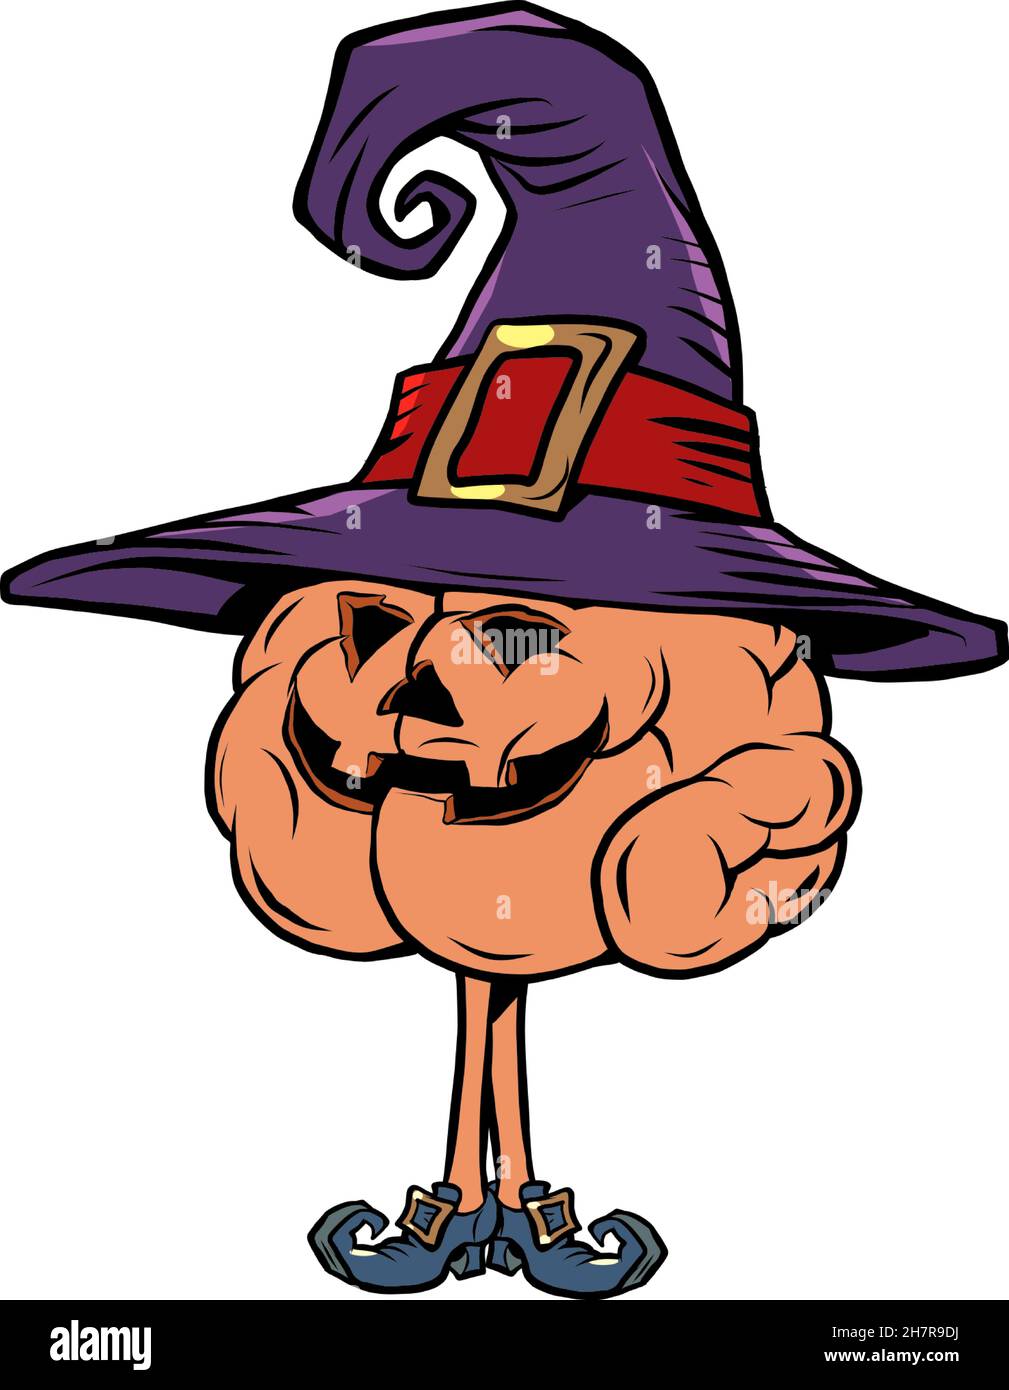 Halloween Pumpkin Holiday human brain character, smart wise Stock Vector